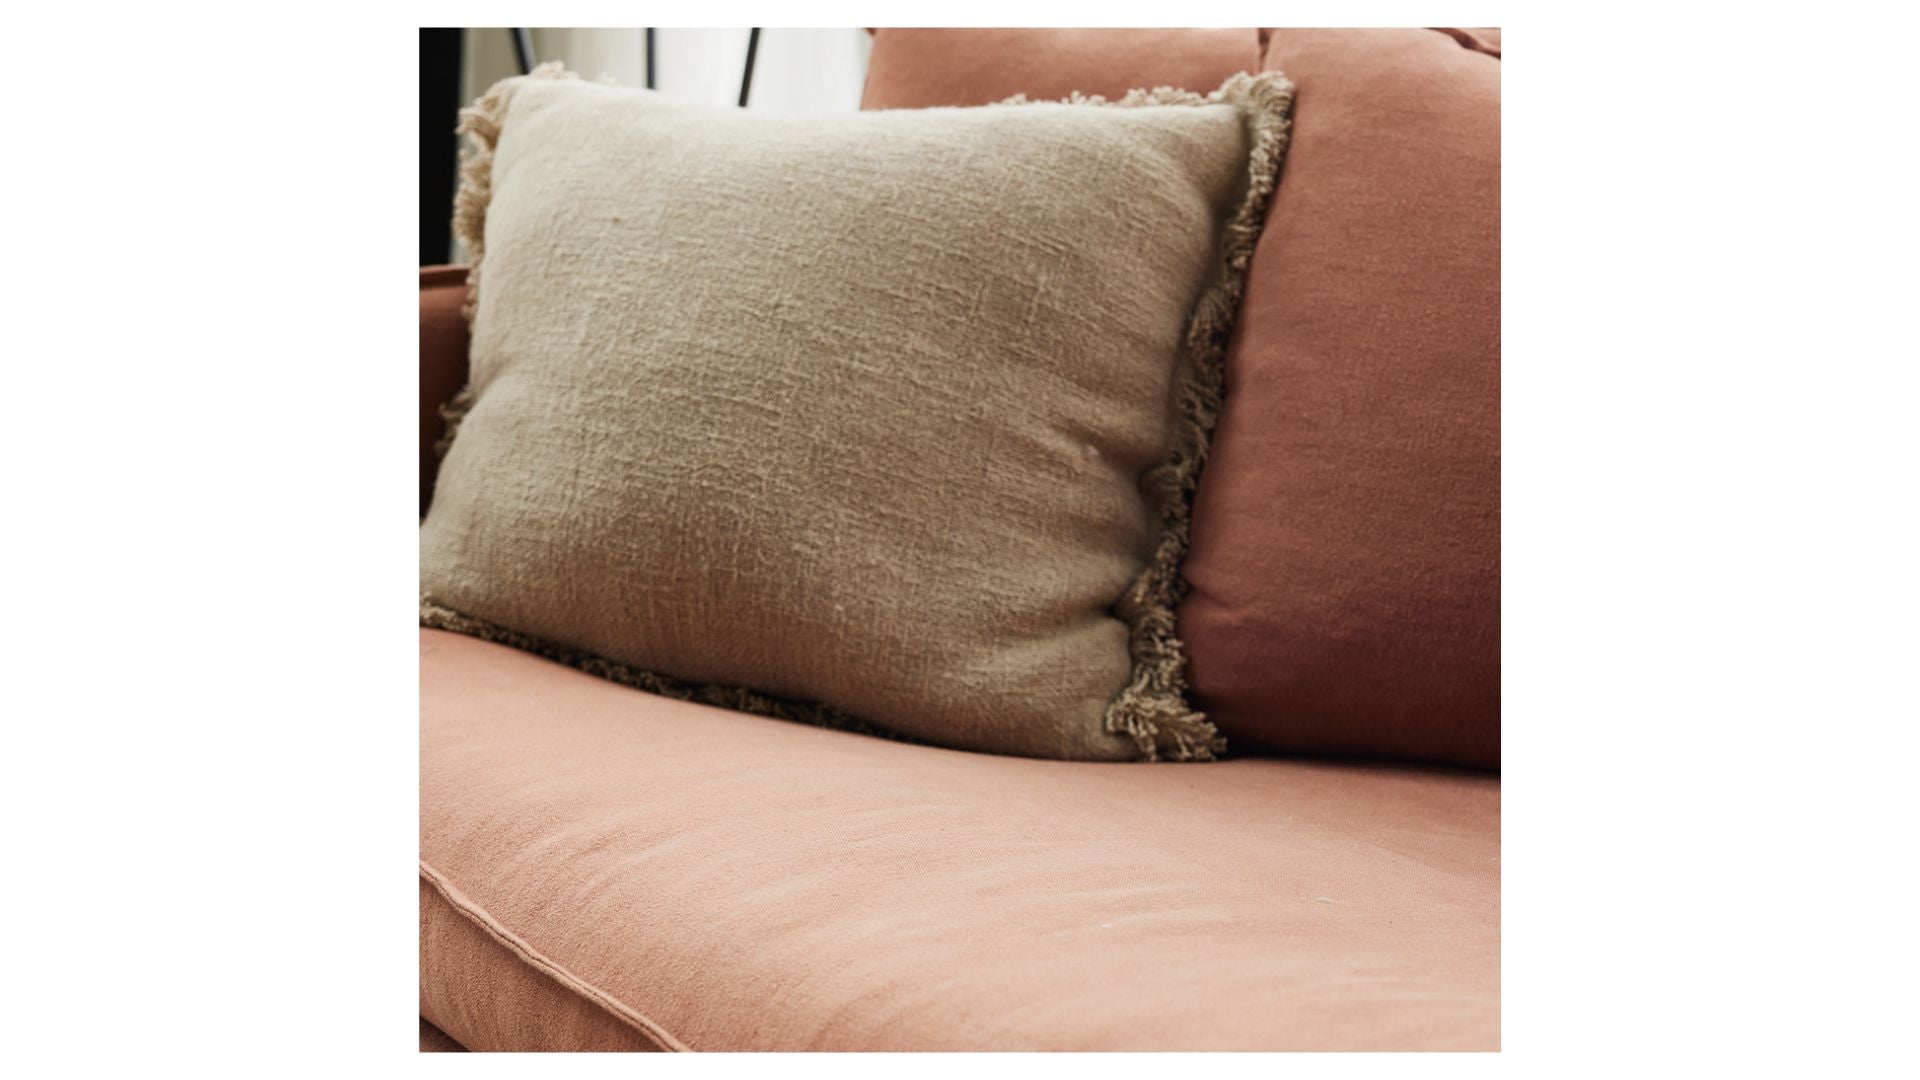 Sofa textures of a plush sofa and cushions